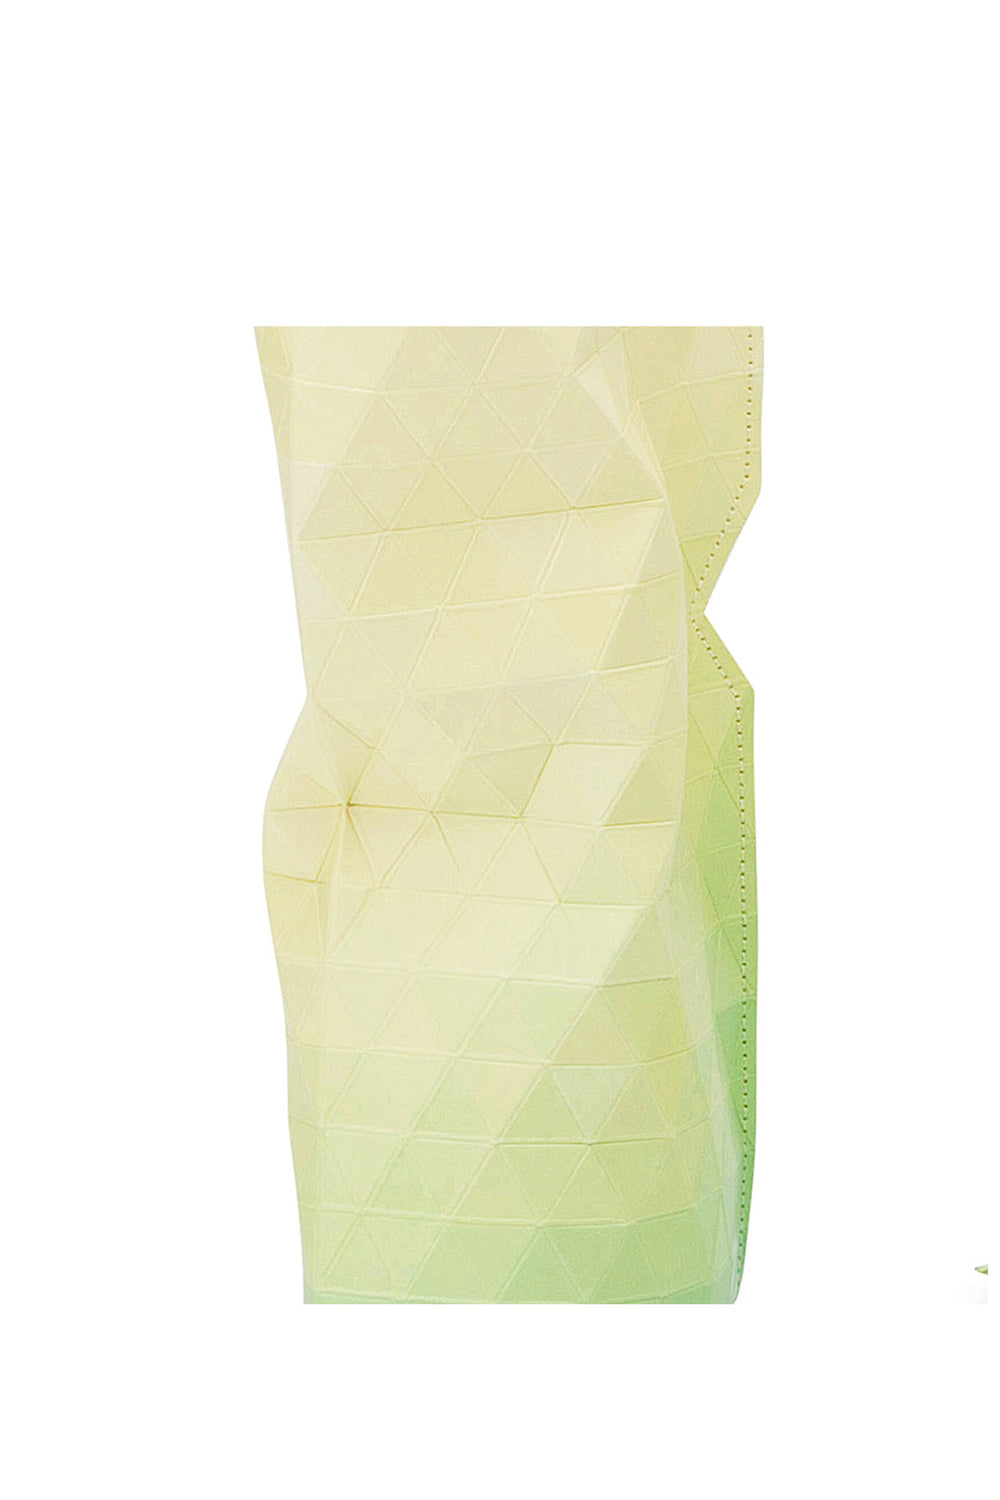 Small Yellow Tone Vase Cover, Vase, Tiny Miracles - 3LittlePicks